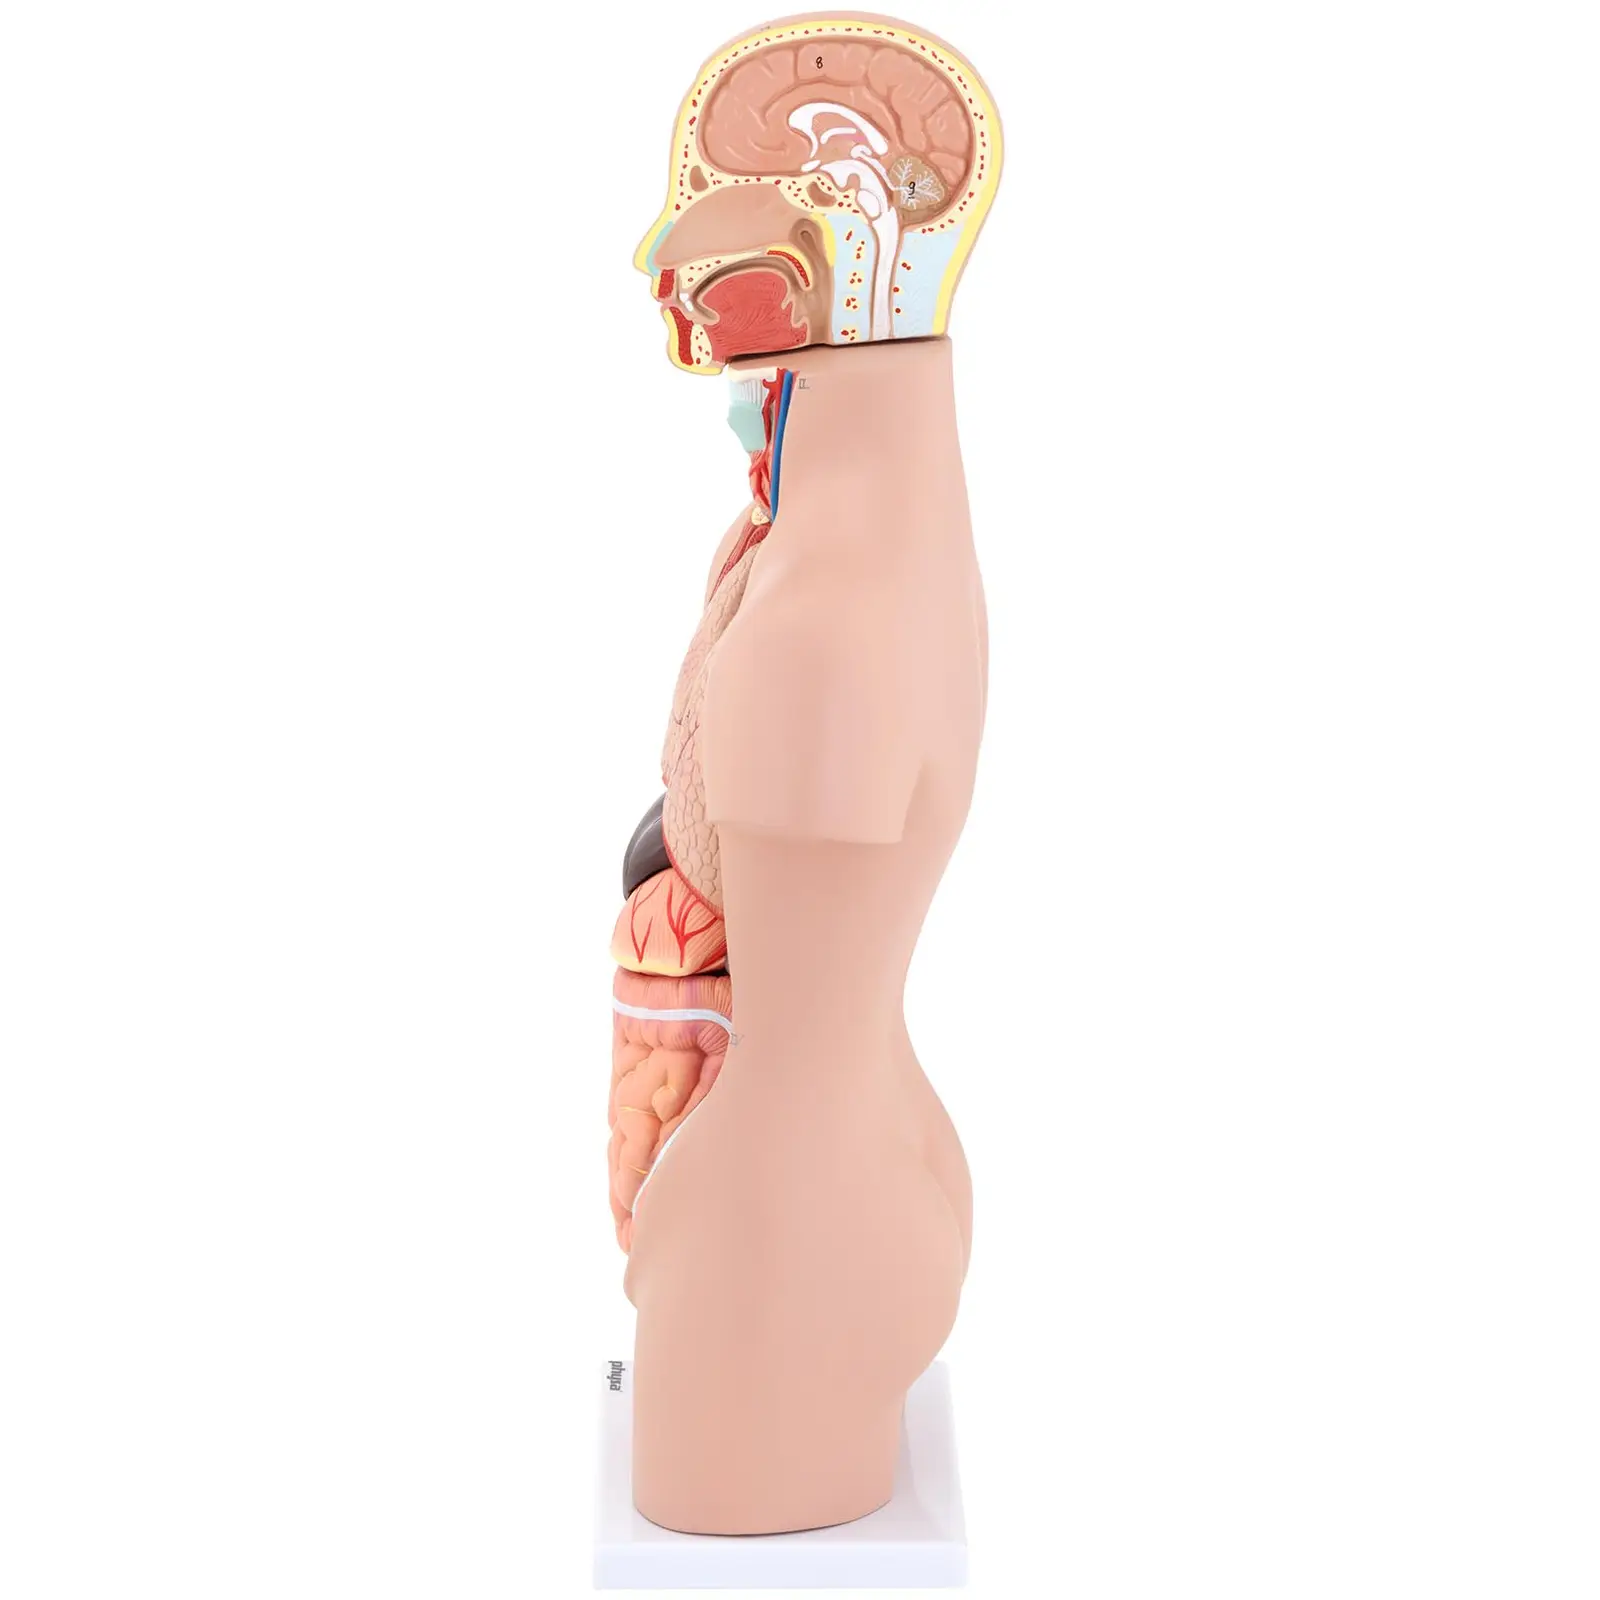 Corpo humano - modelo anatómico